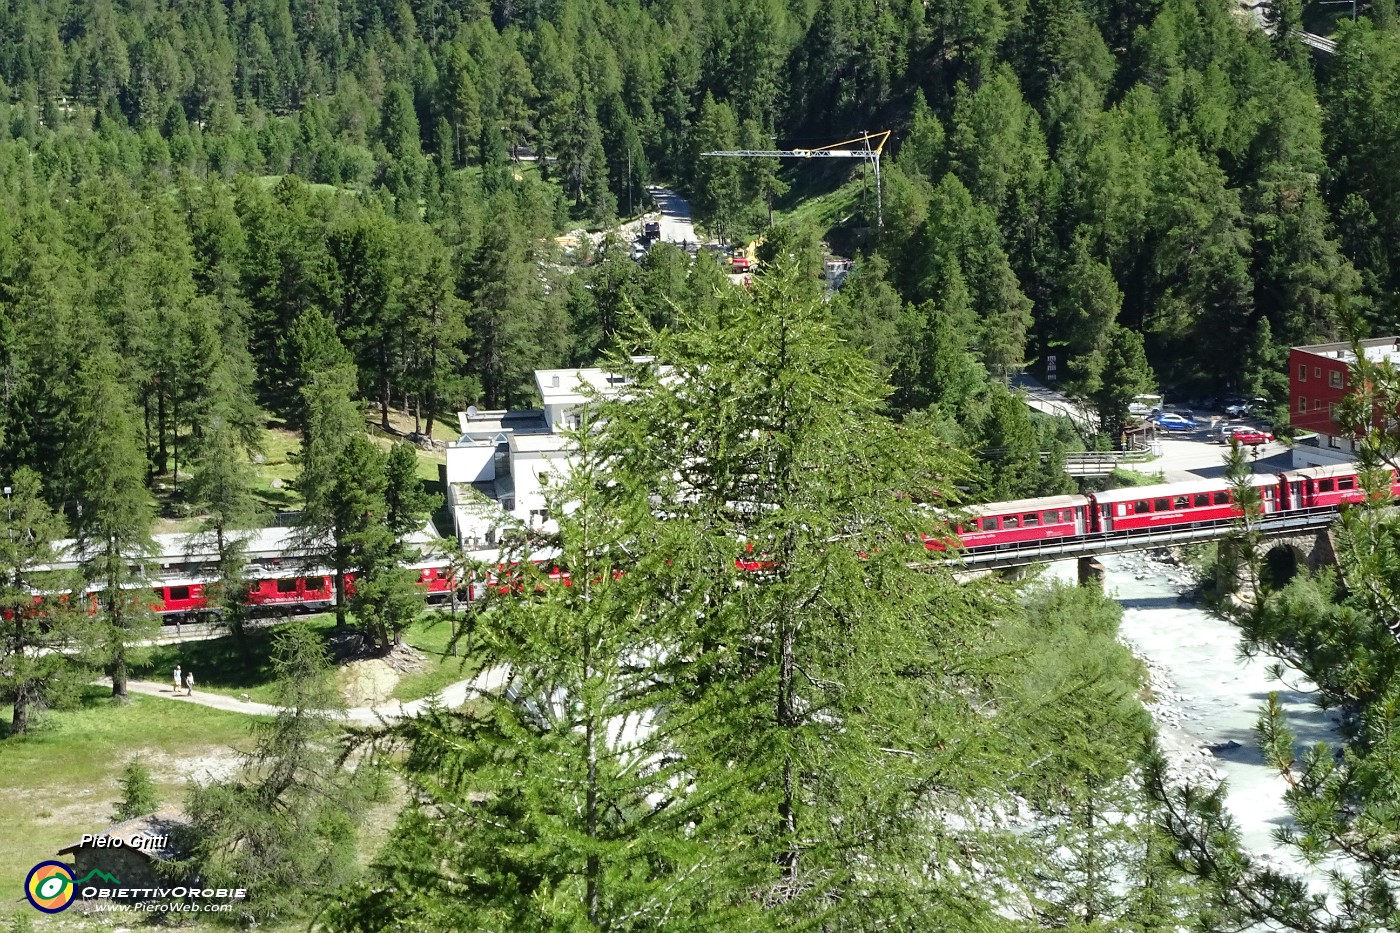 17 Passa il trenino del Bernina Express.JPG